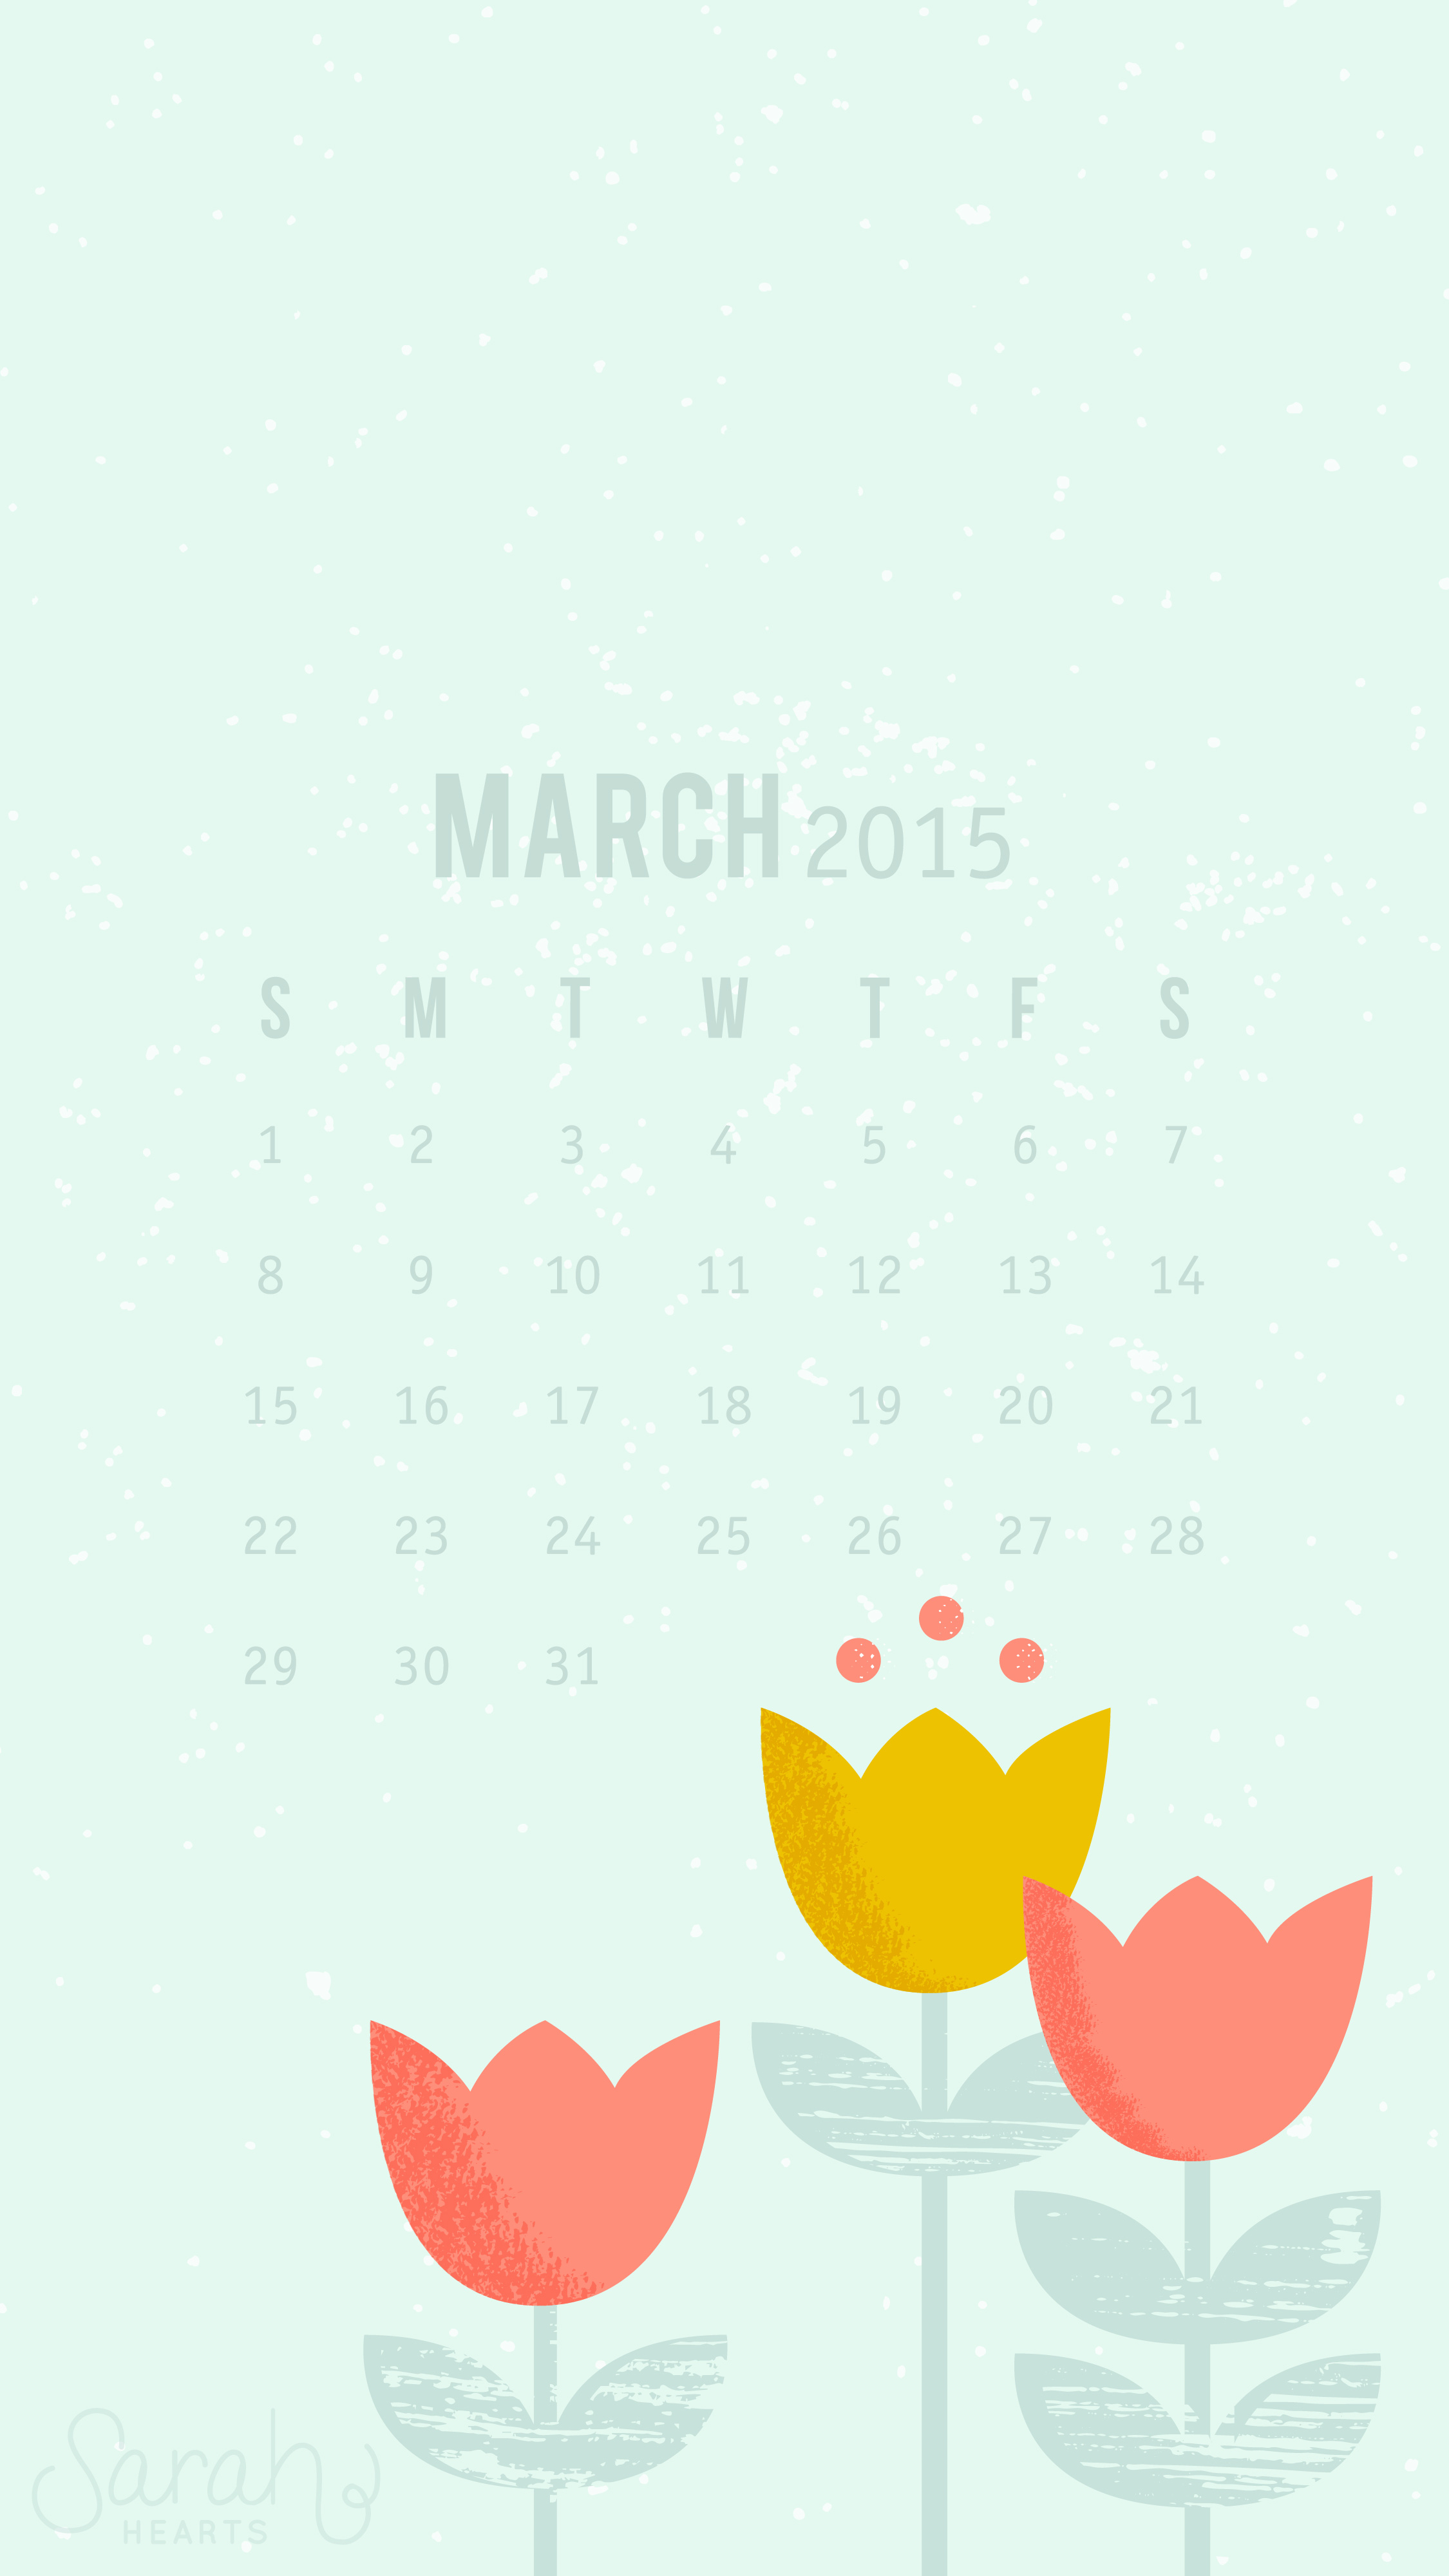 March 2015 Calendar Wallpaper - Sarah Hearts